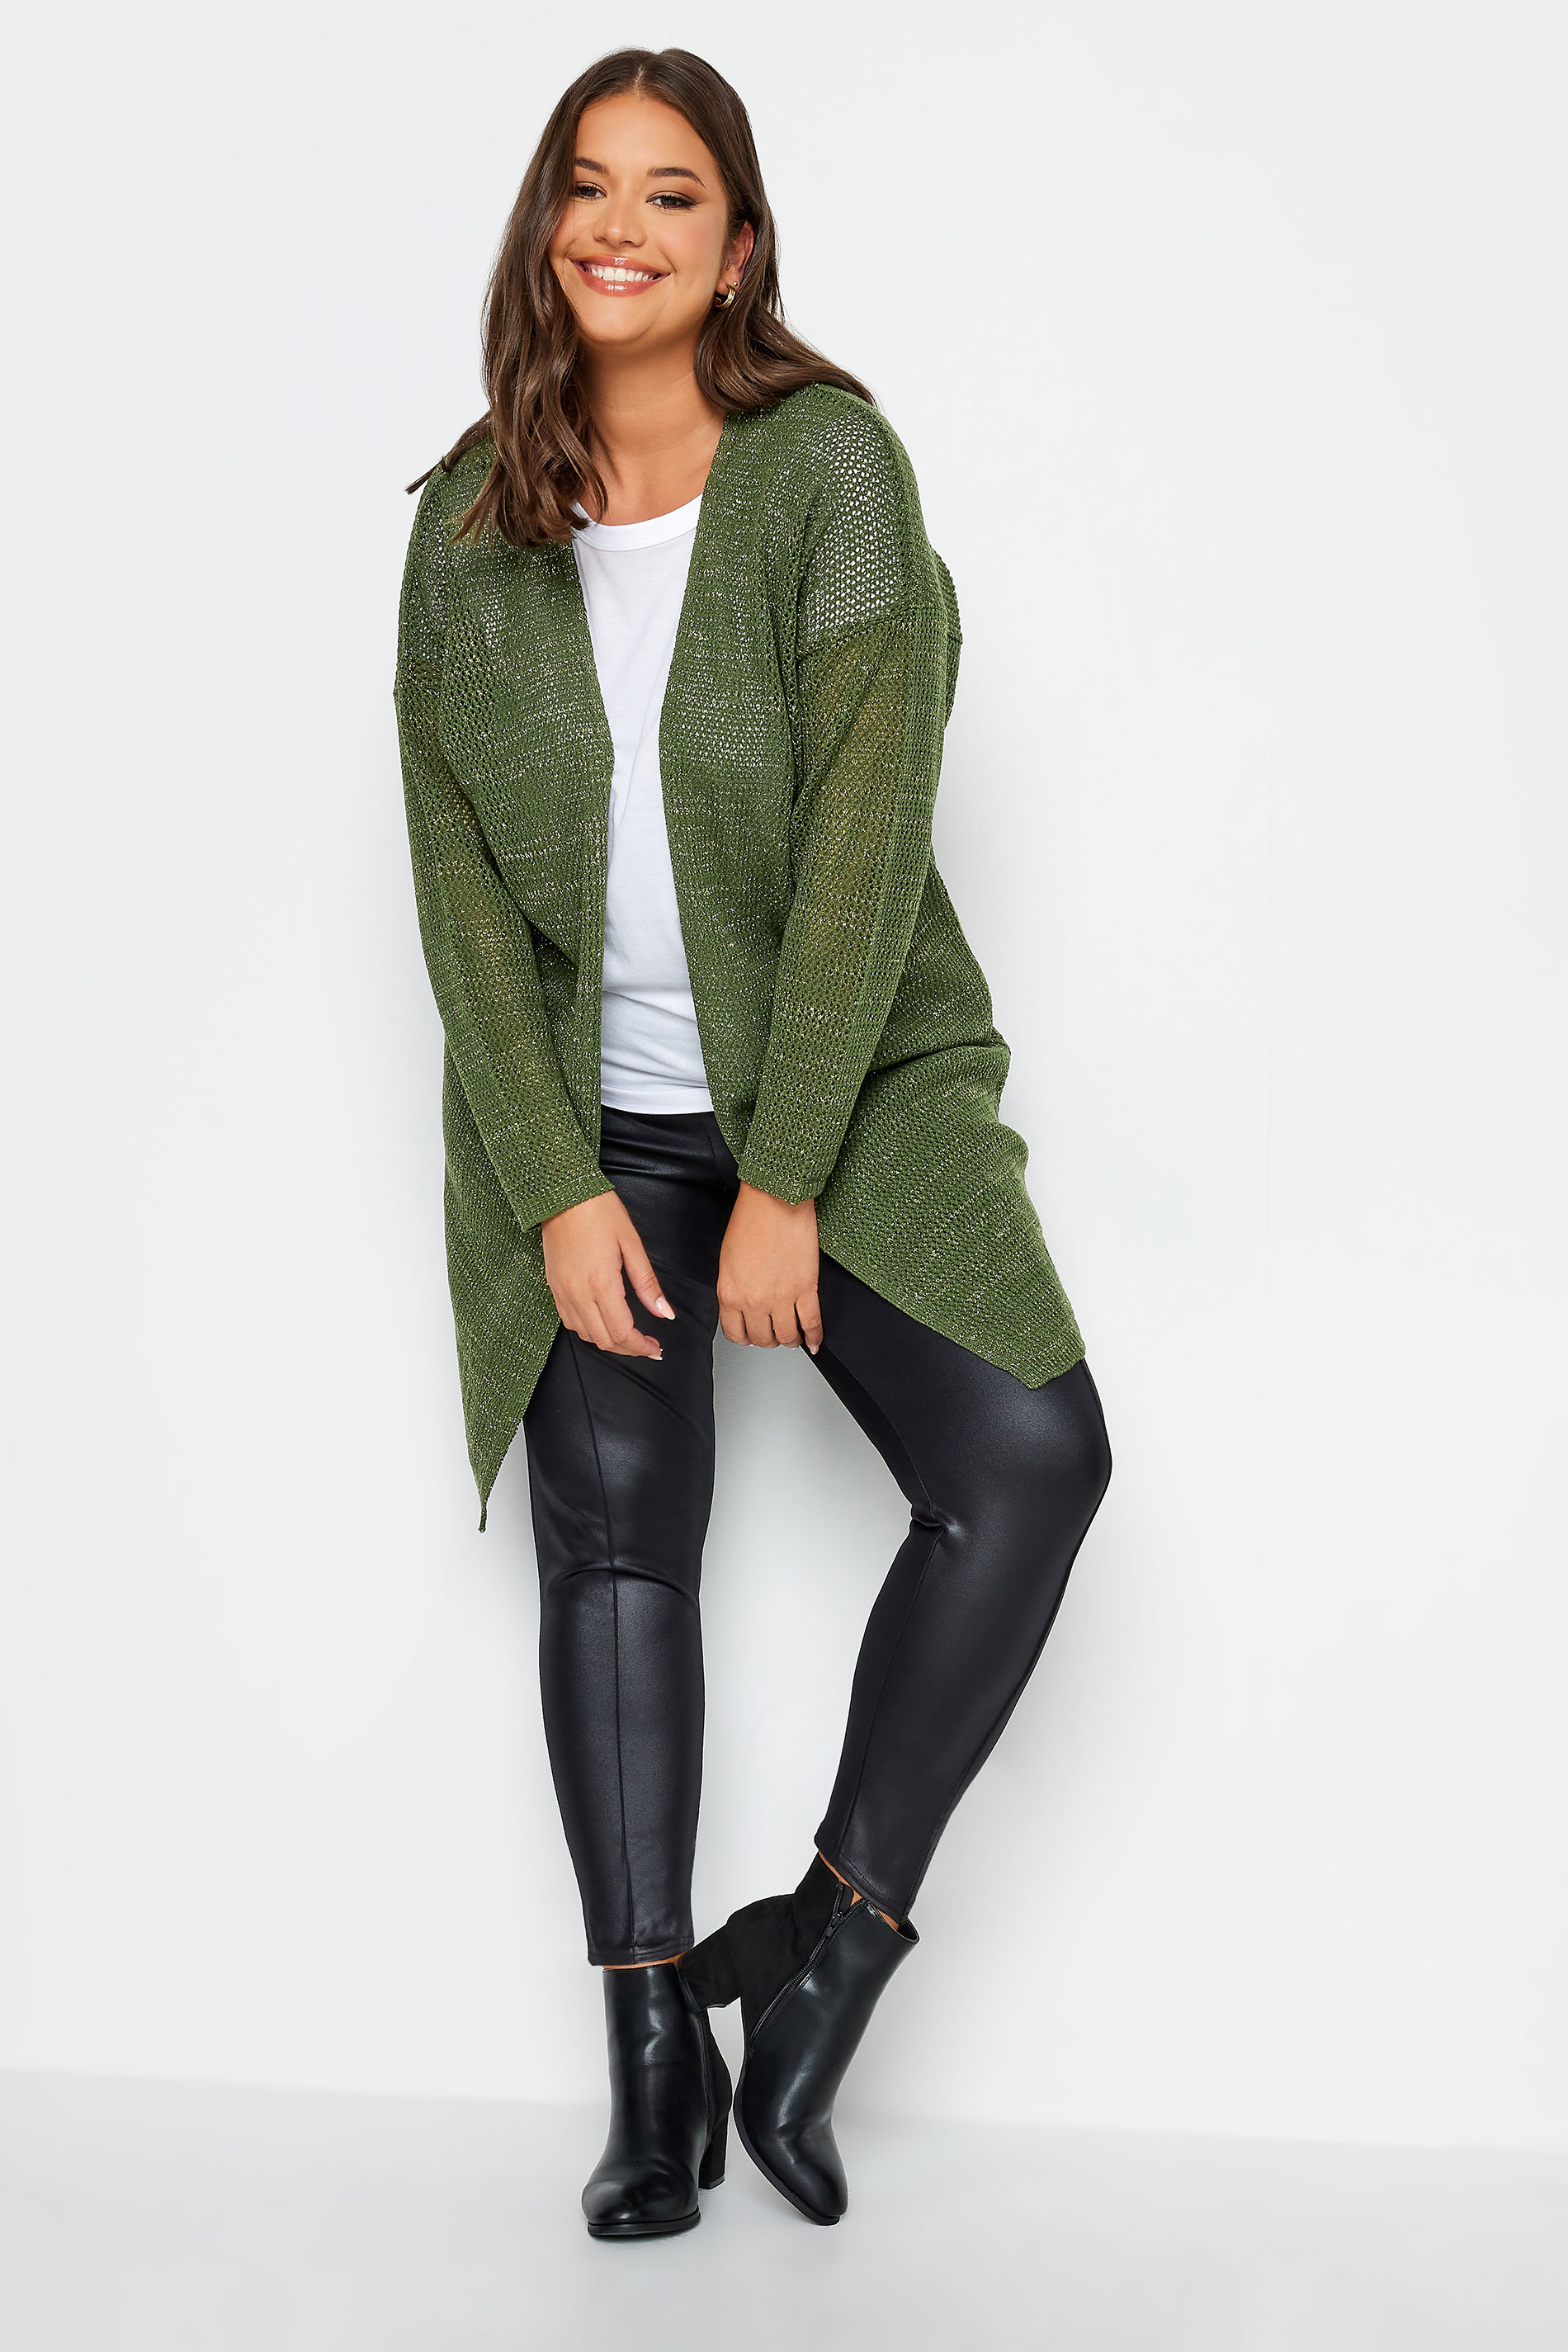 YOURS Curve Plus Size Khaki Green Metallic Knit Cardigan | Yours Clothing  2